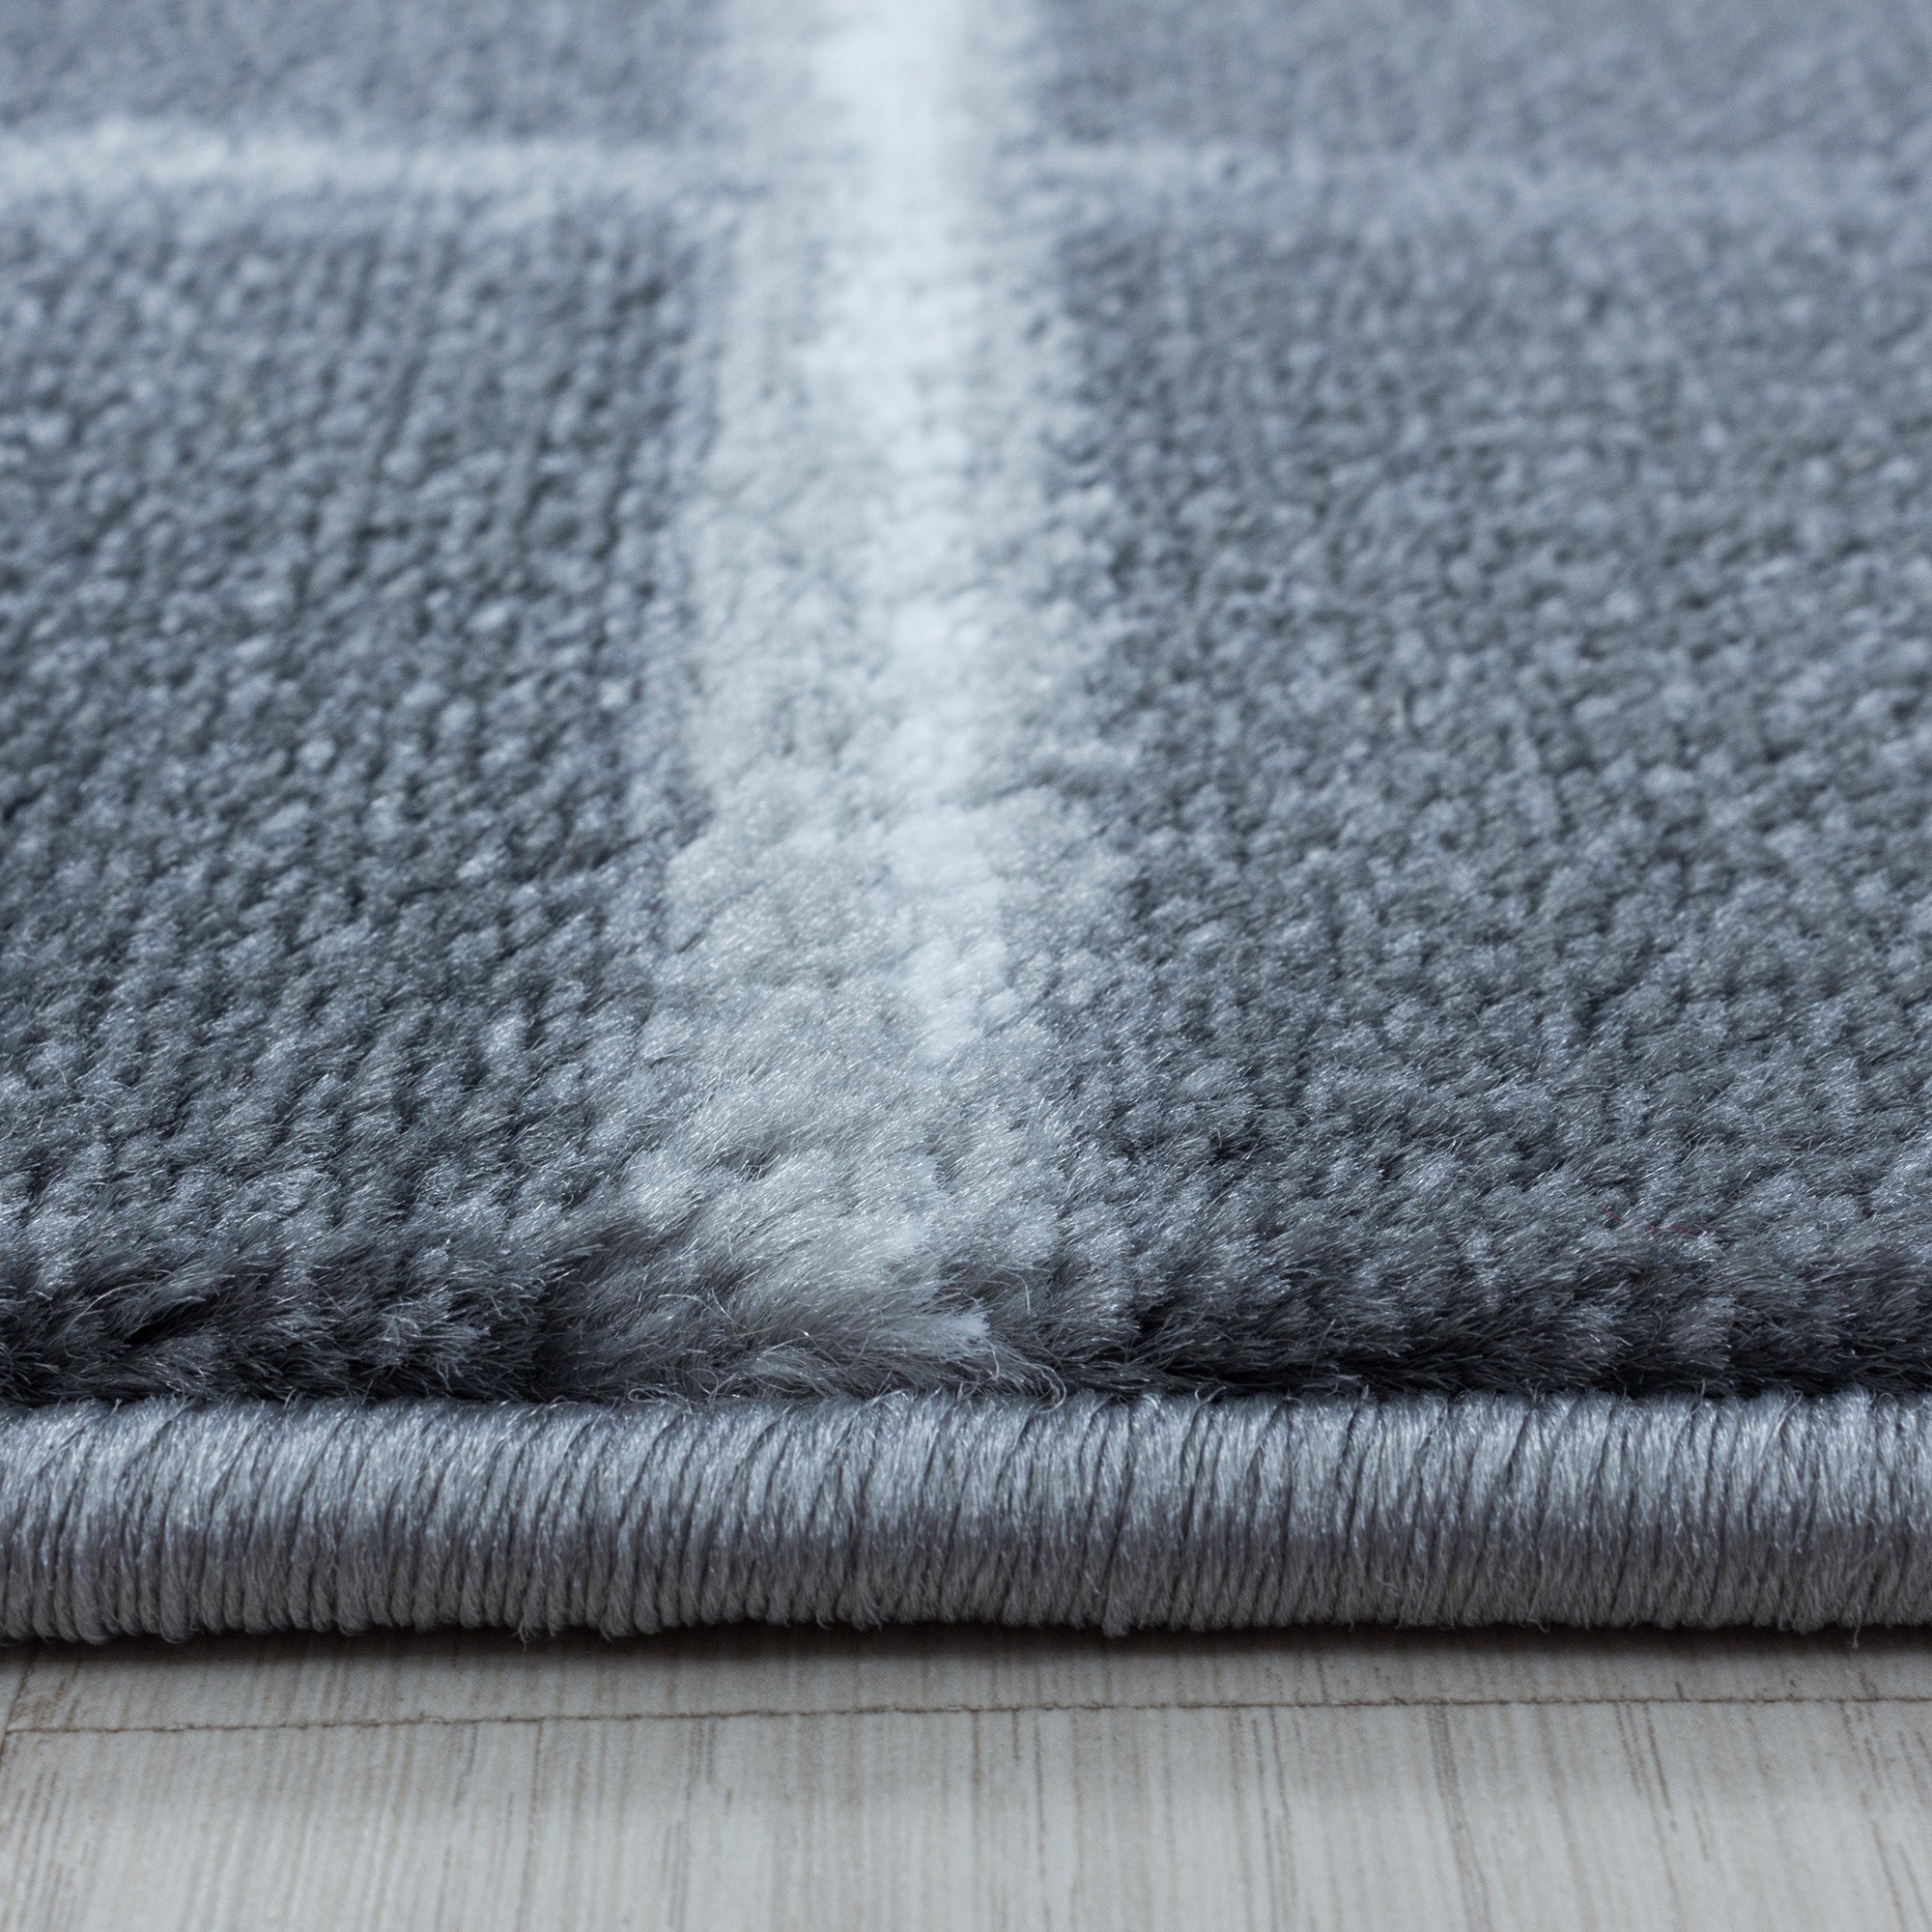 Kurzflor Design Teppich Wohnzimmerteppich Gitter Muster Soft Flor Grau